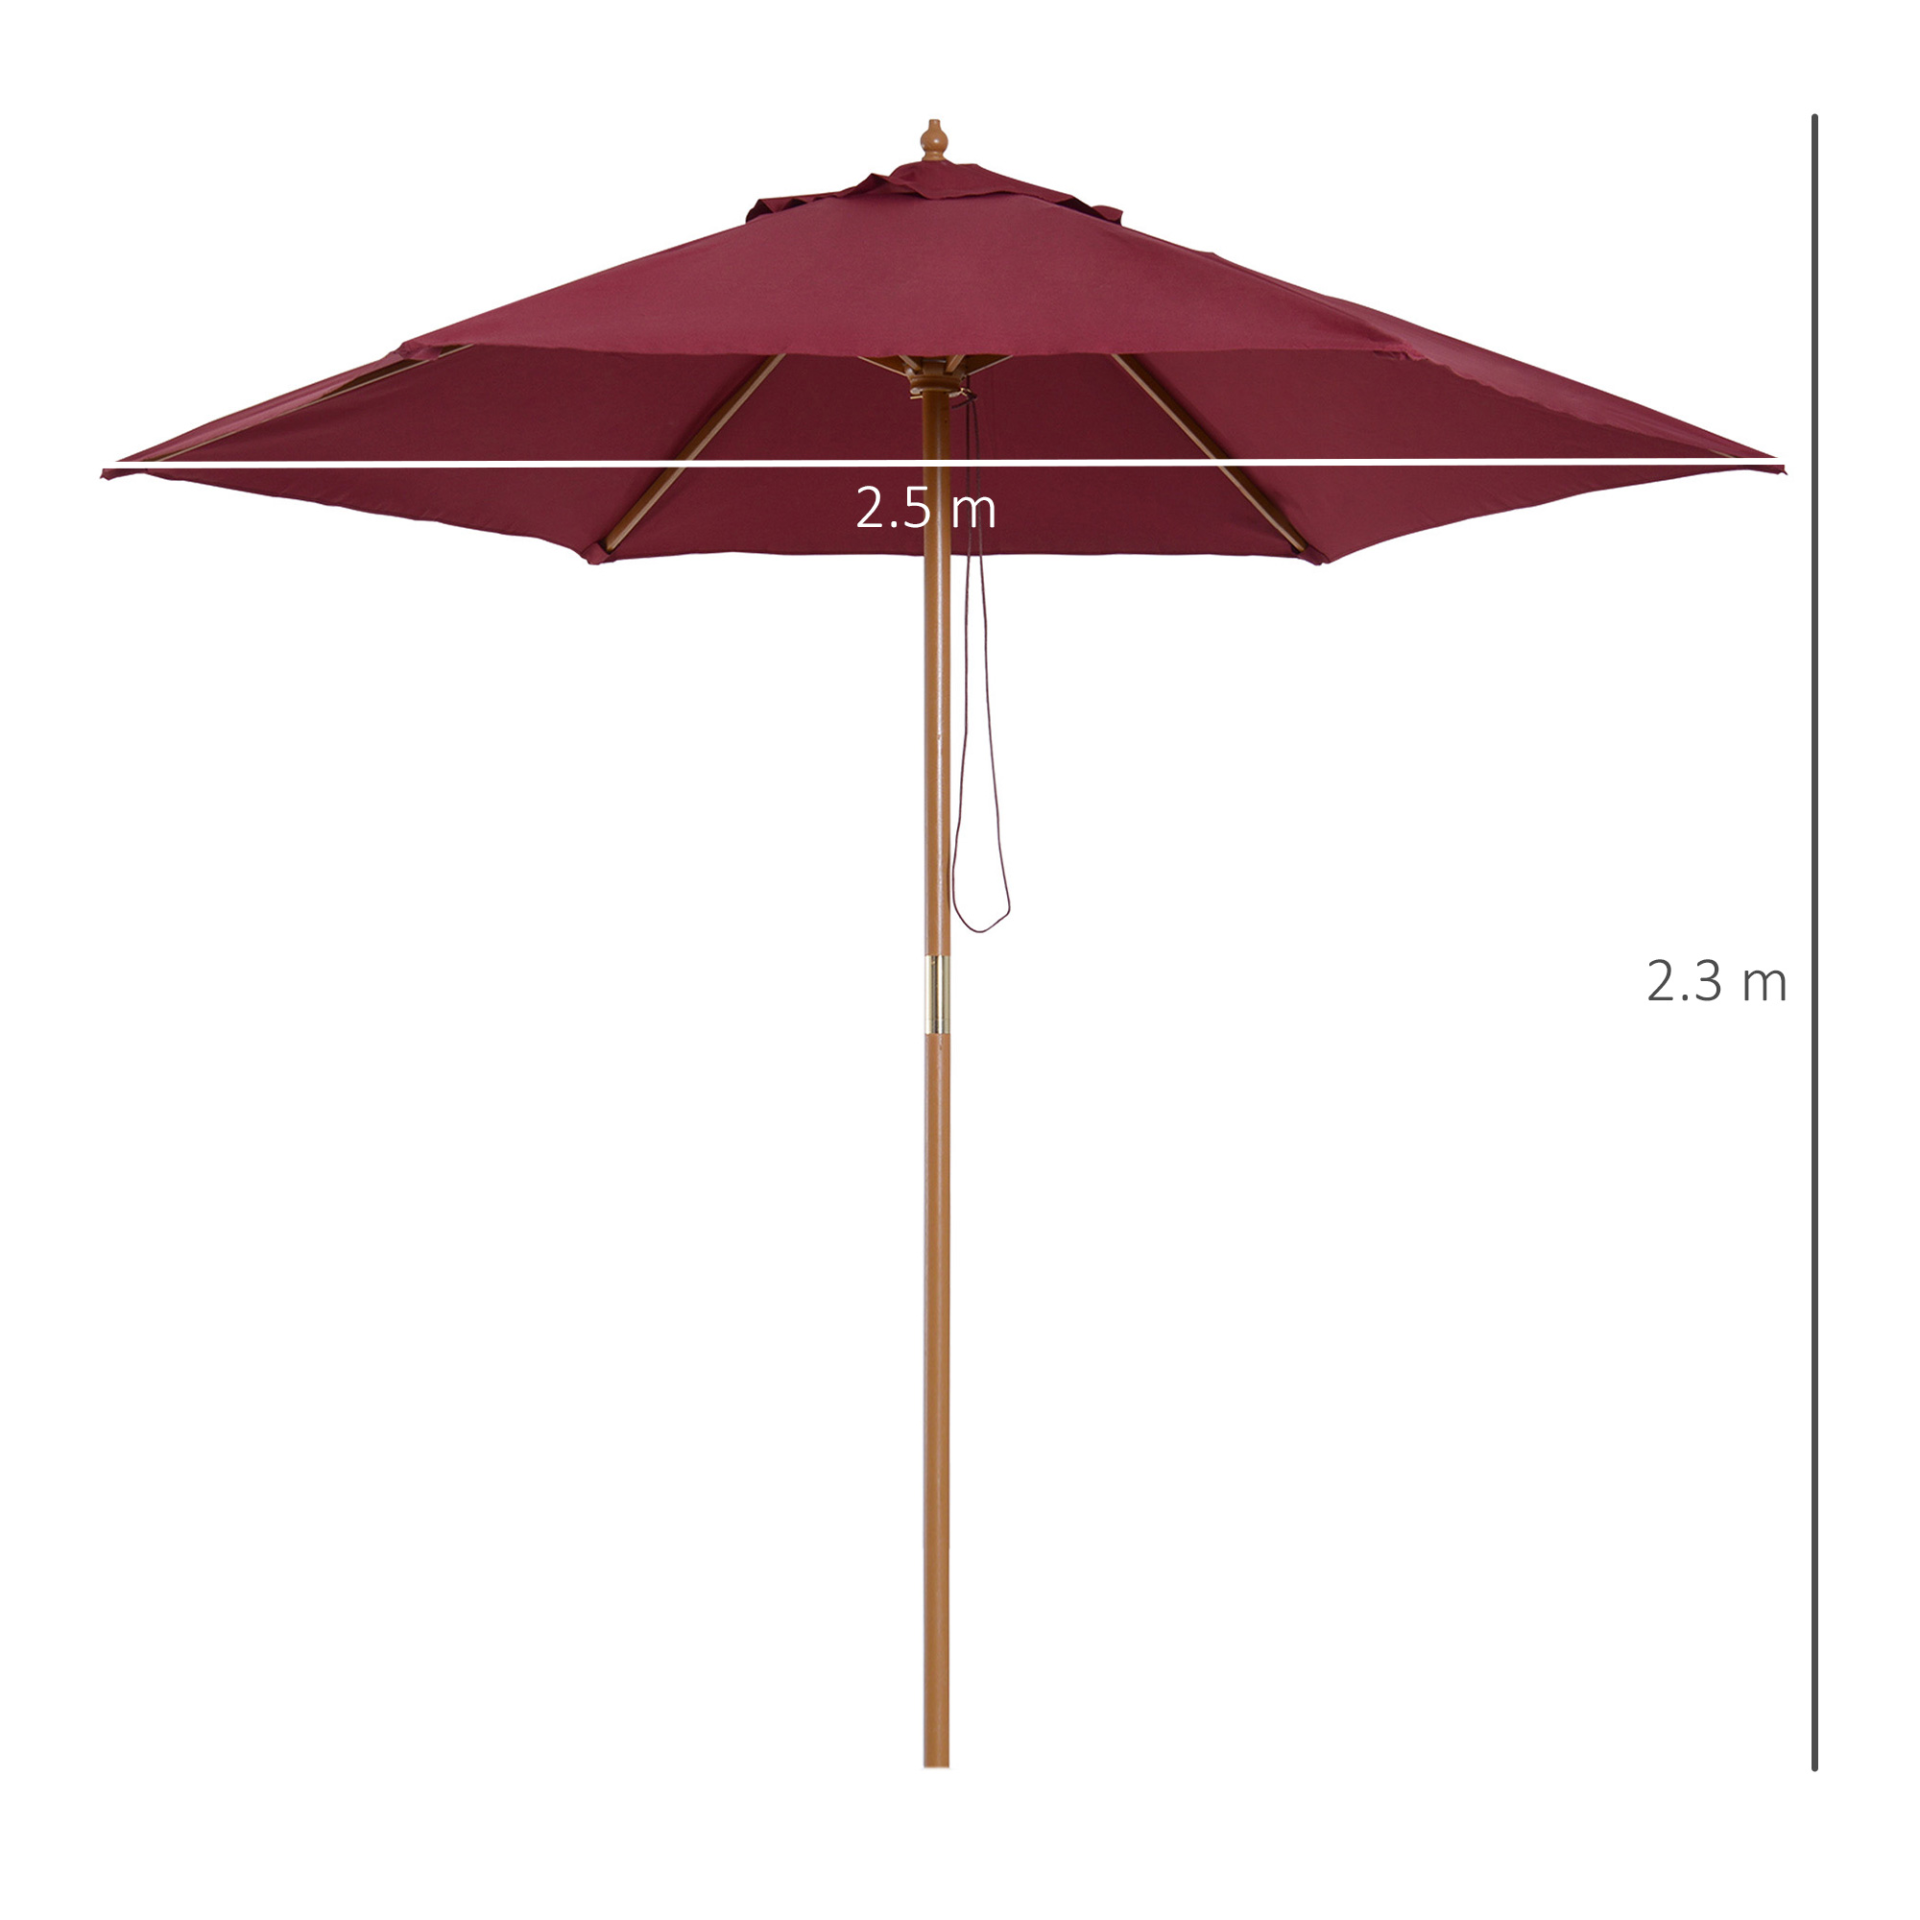 Outsunny 2.5m Wood Garden Parasol Sun Shade Patio Outdoor Wooden Umbrella Canopy Wine Red